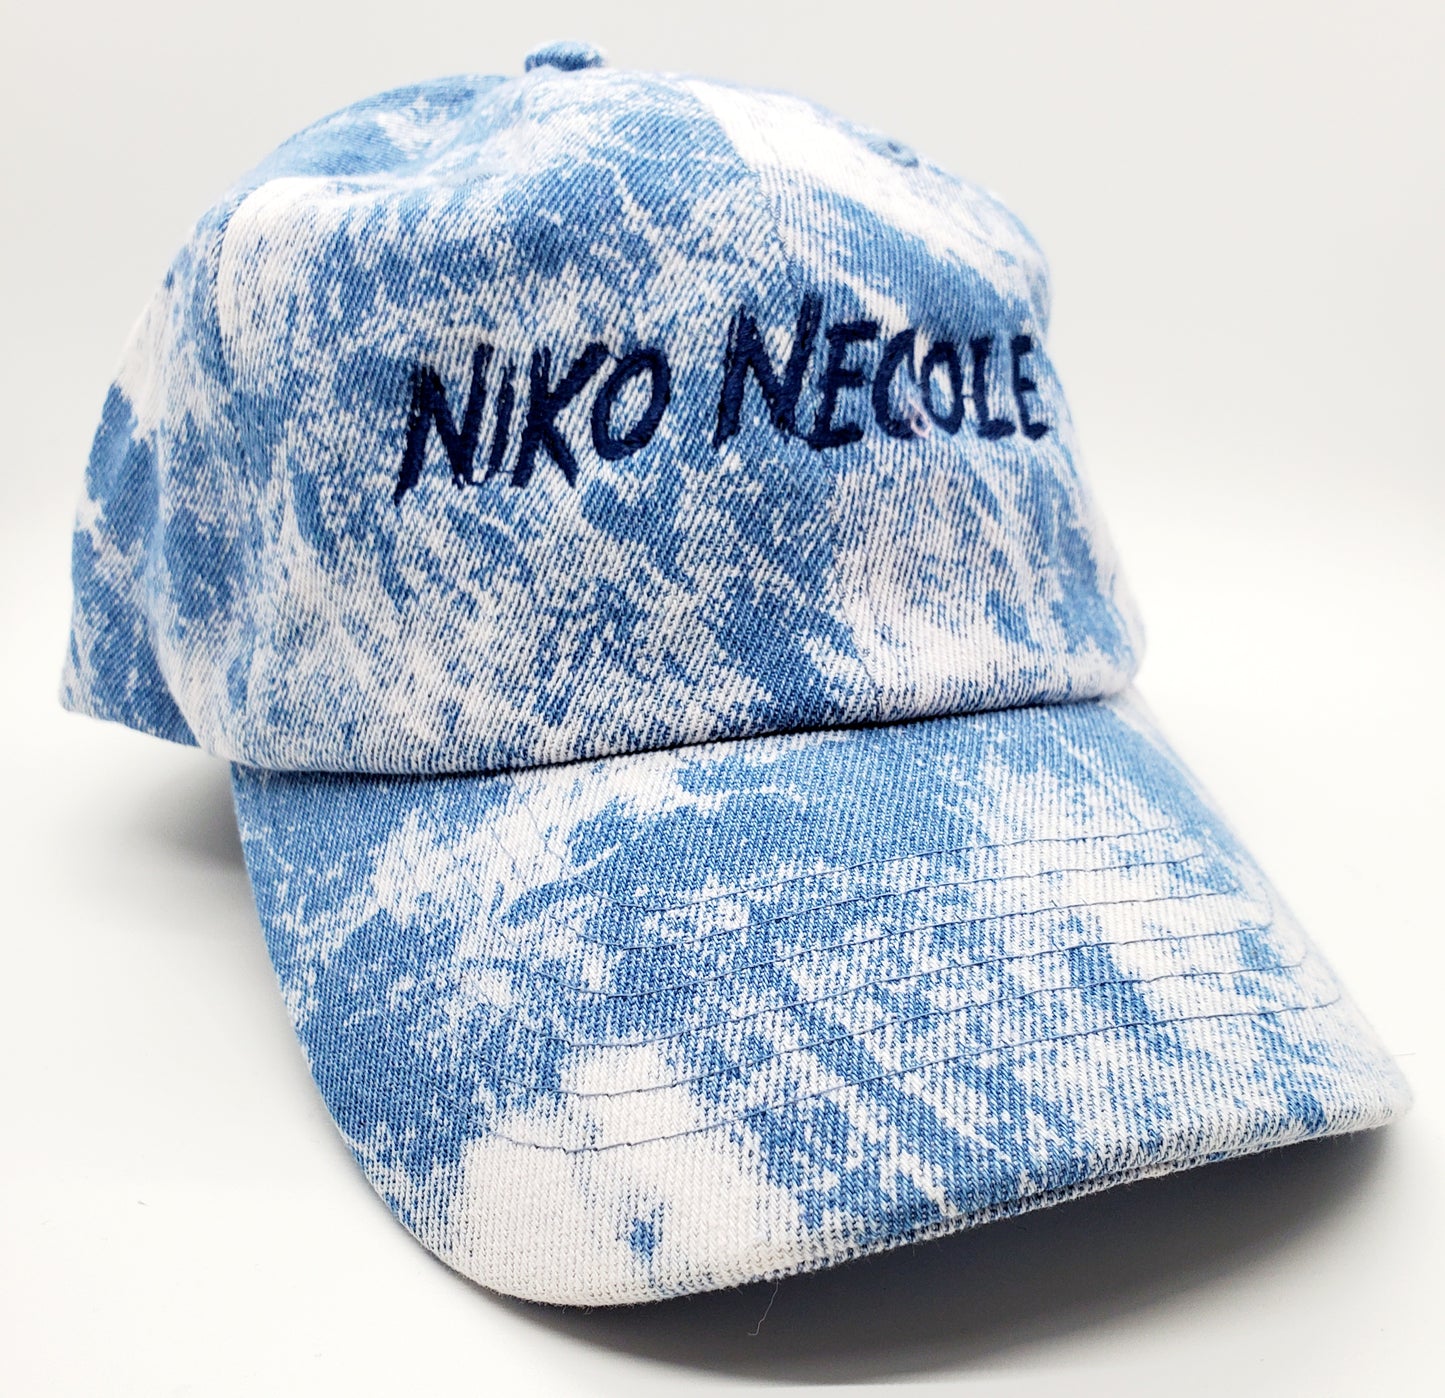 Niko Necole Blu Jean Hat